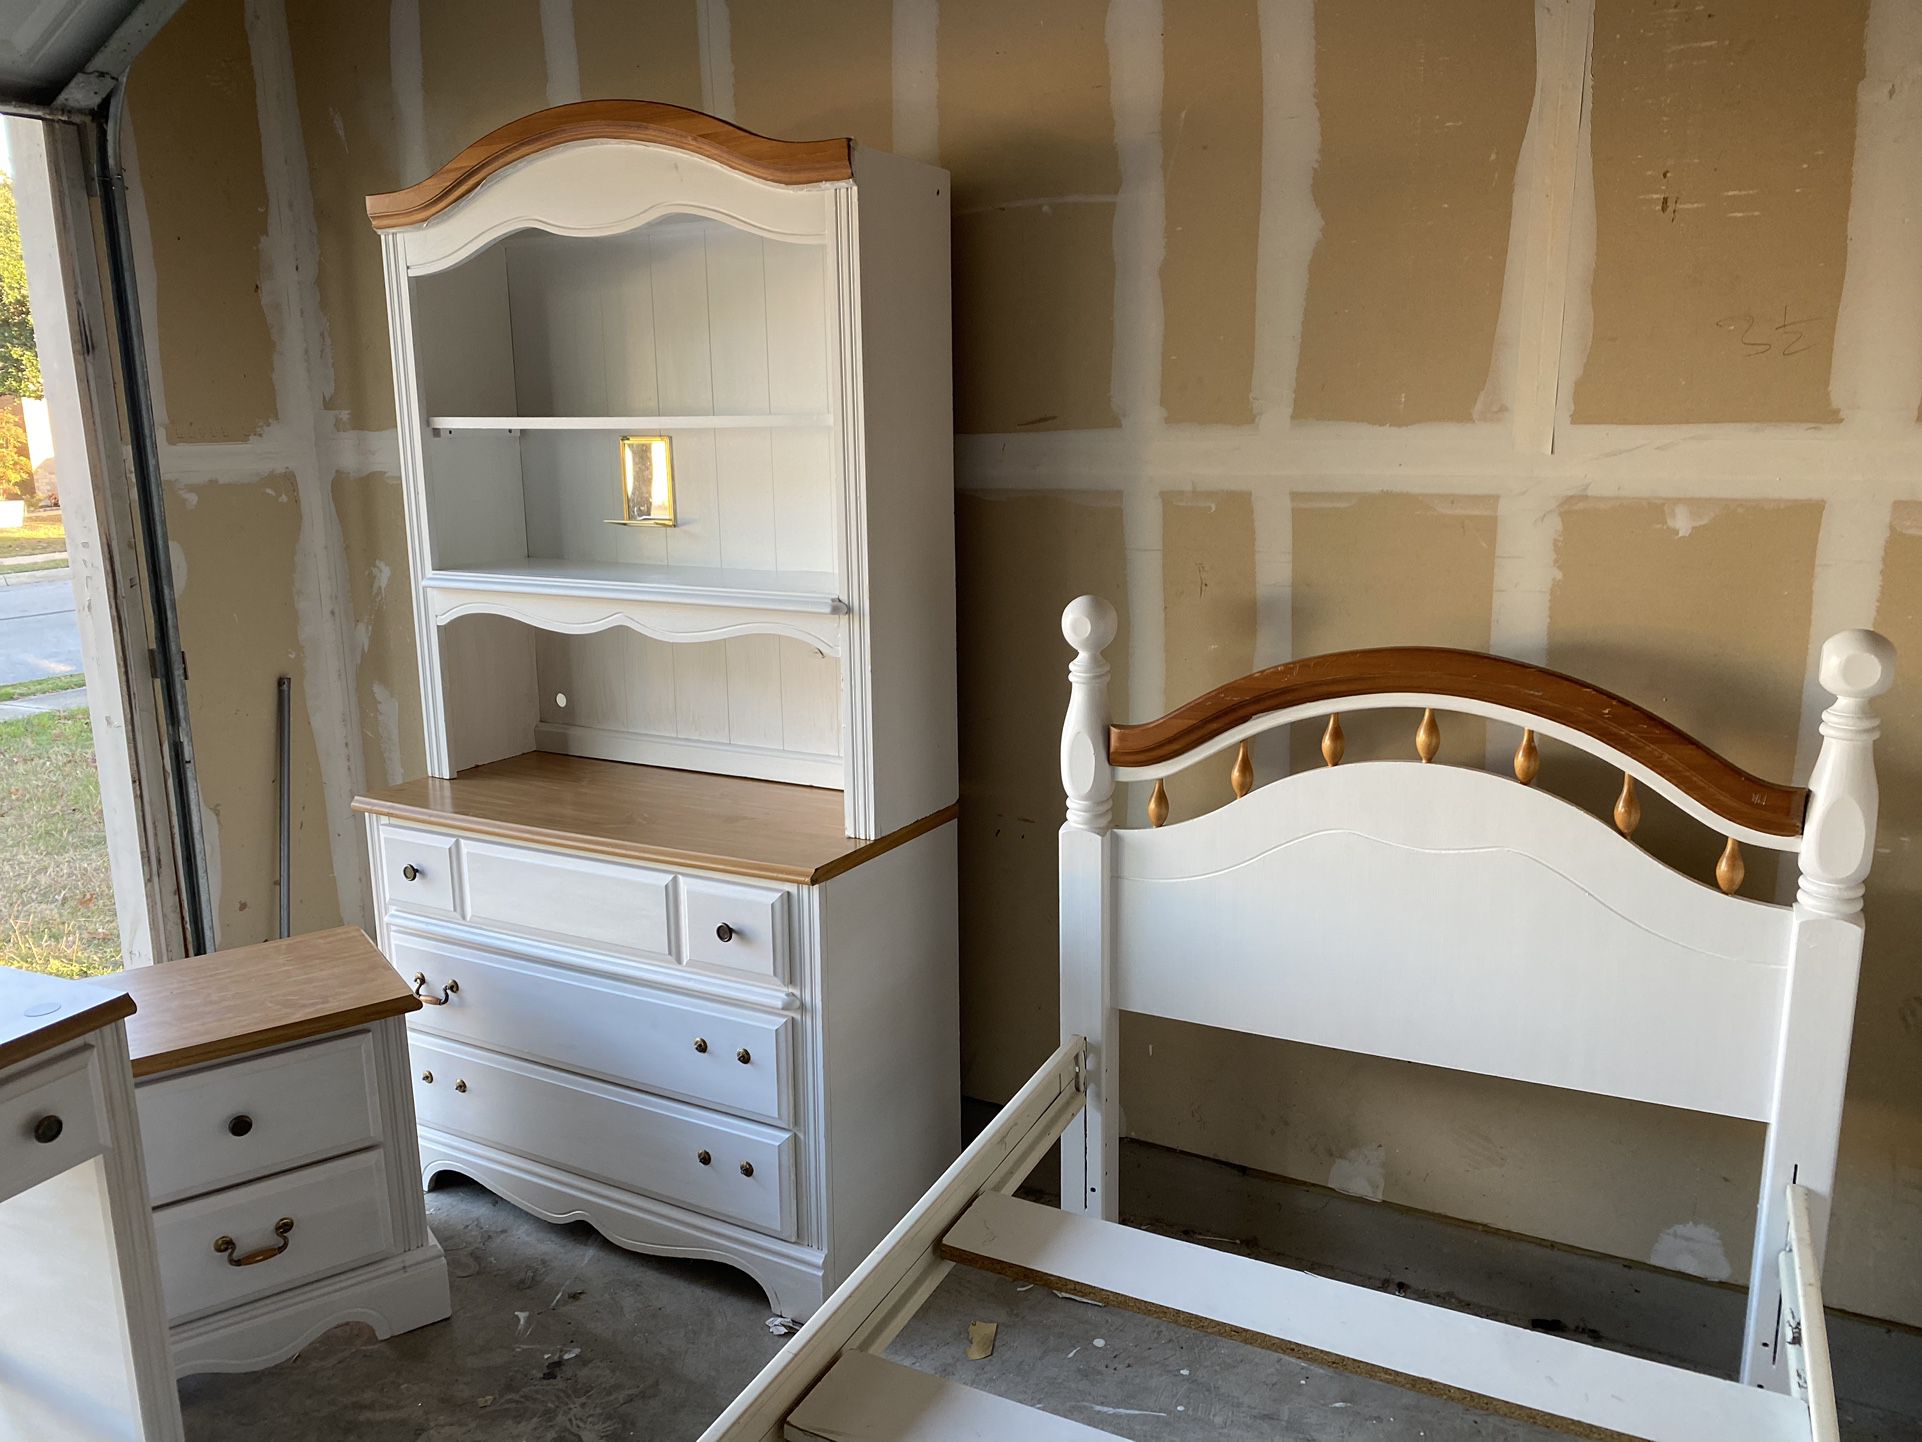 Matching Modern Solid Wood Complete Bedroom Set: White Dresser with shelf, Desk, Nightstand & Bed Frame